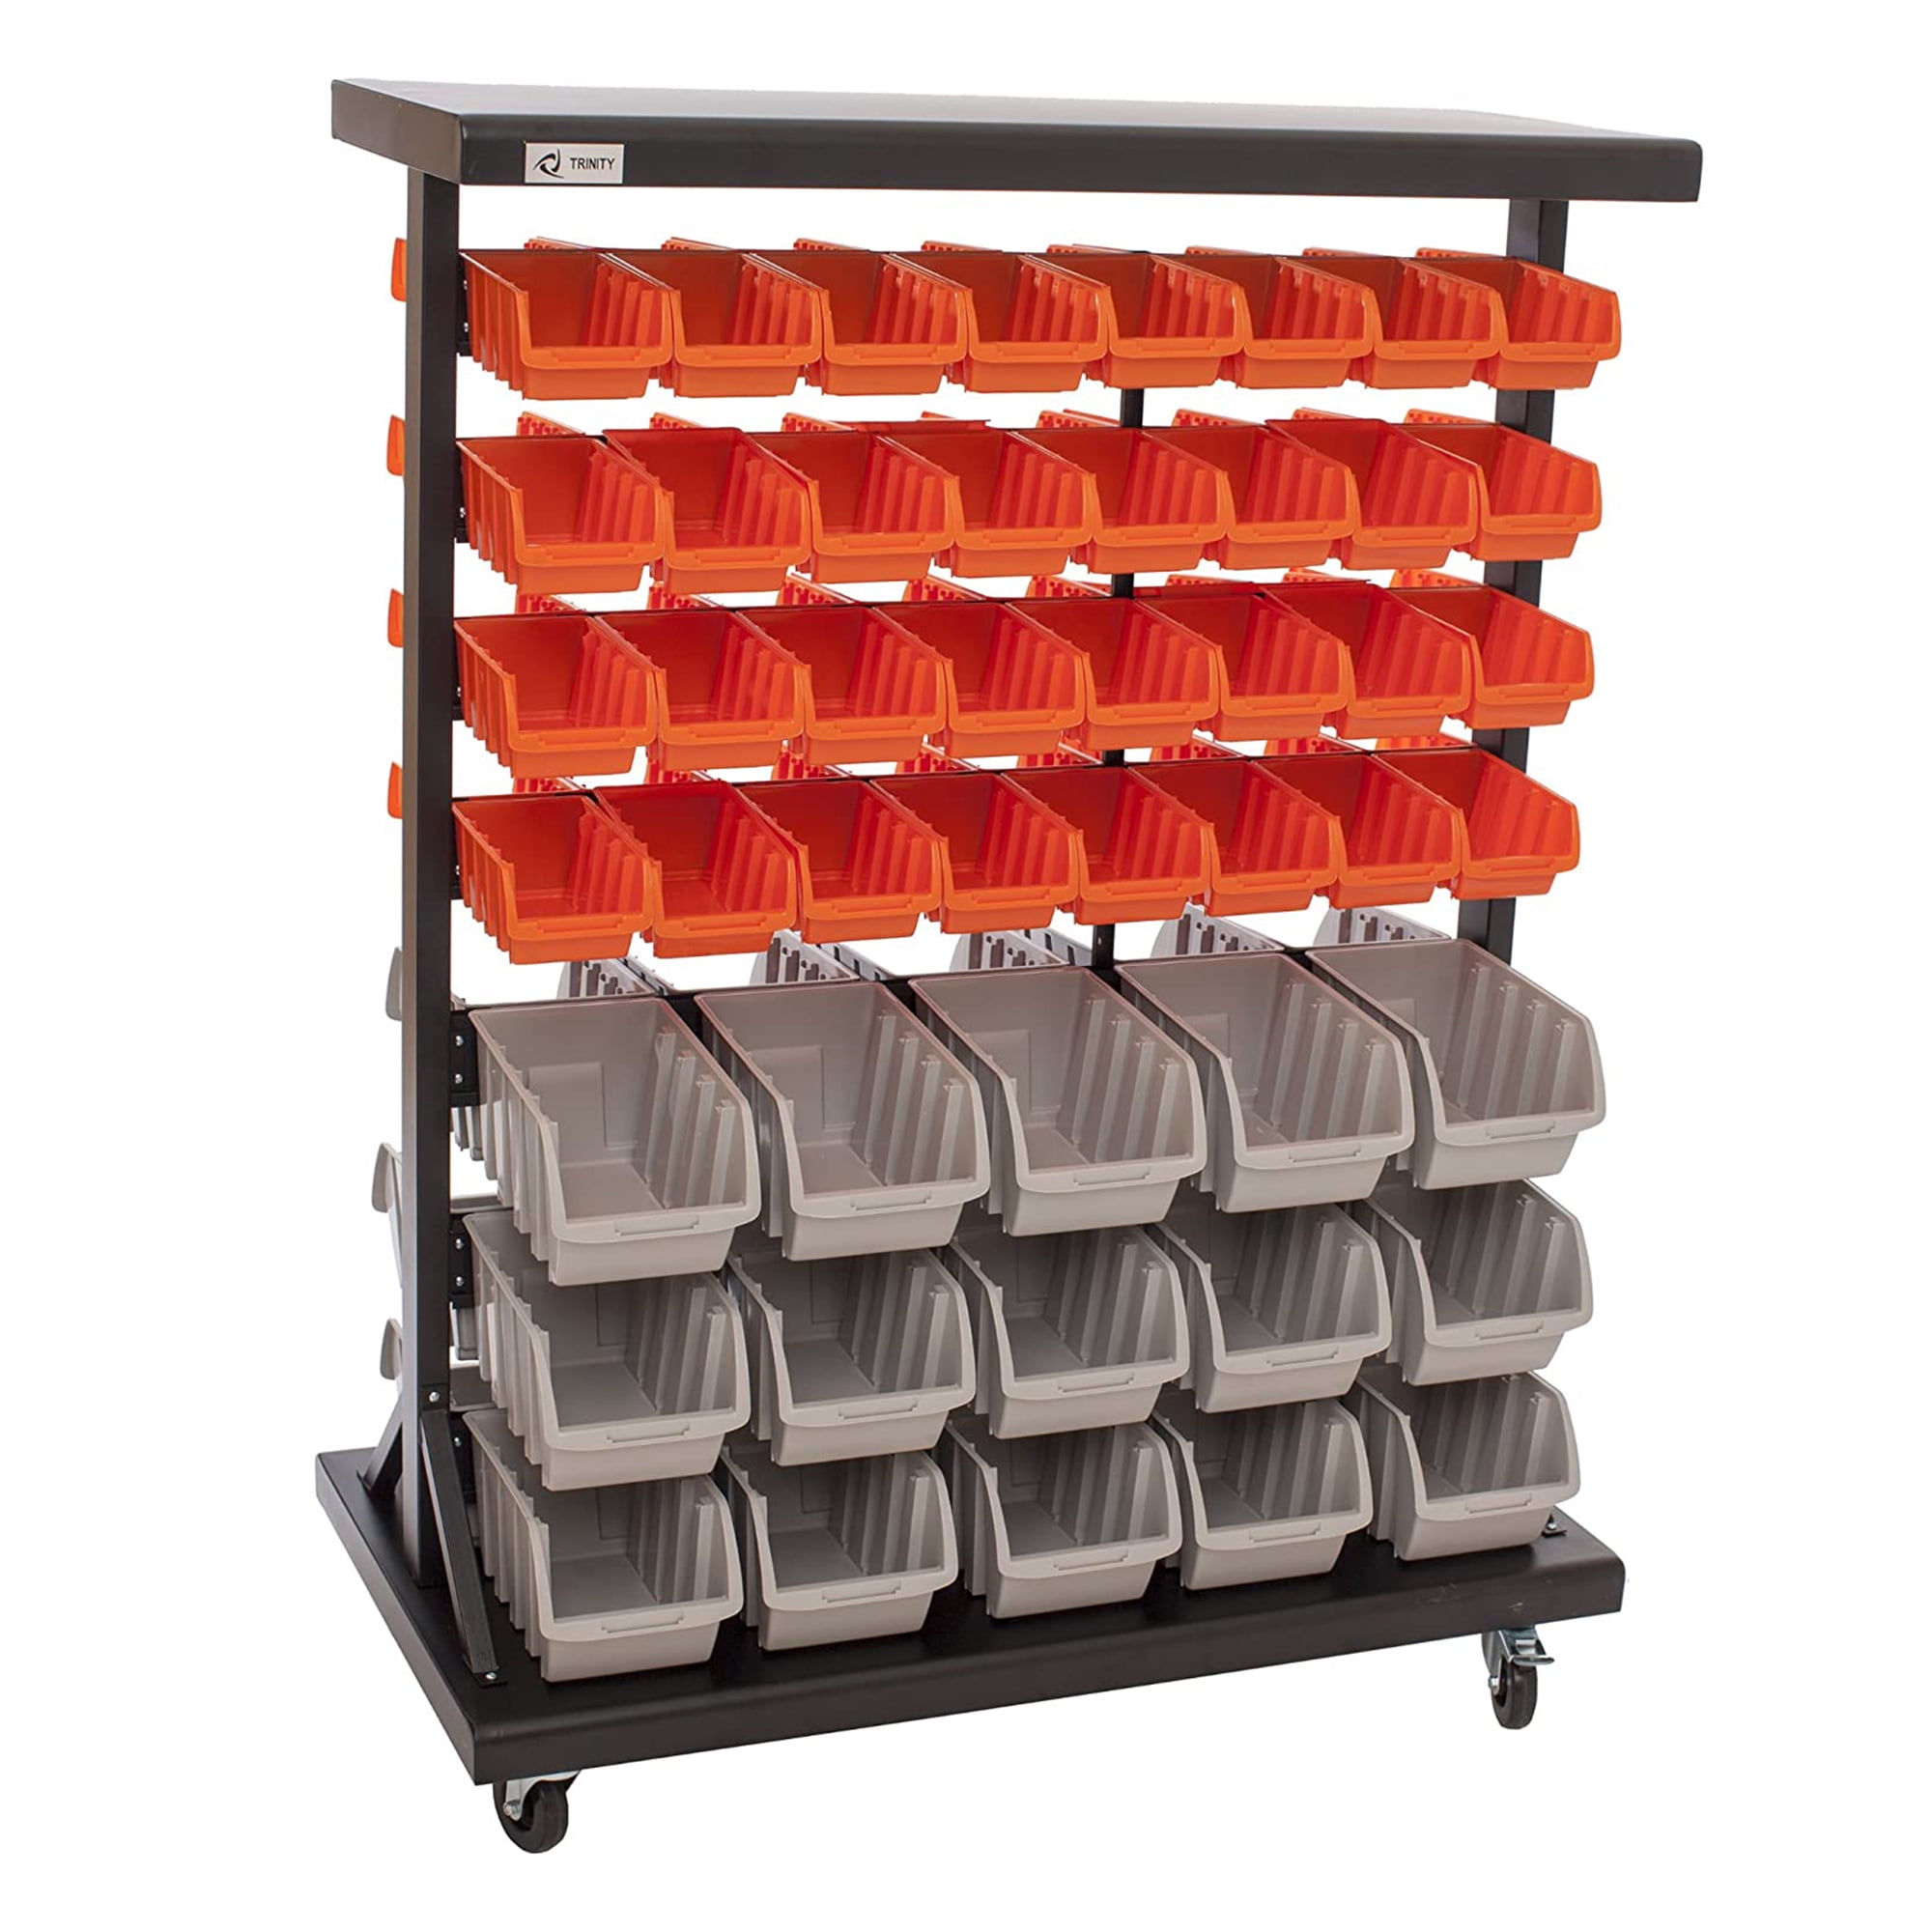 Mobile storage bin rack with 112 storage bins, double-sided, SLK112